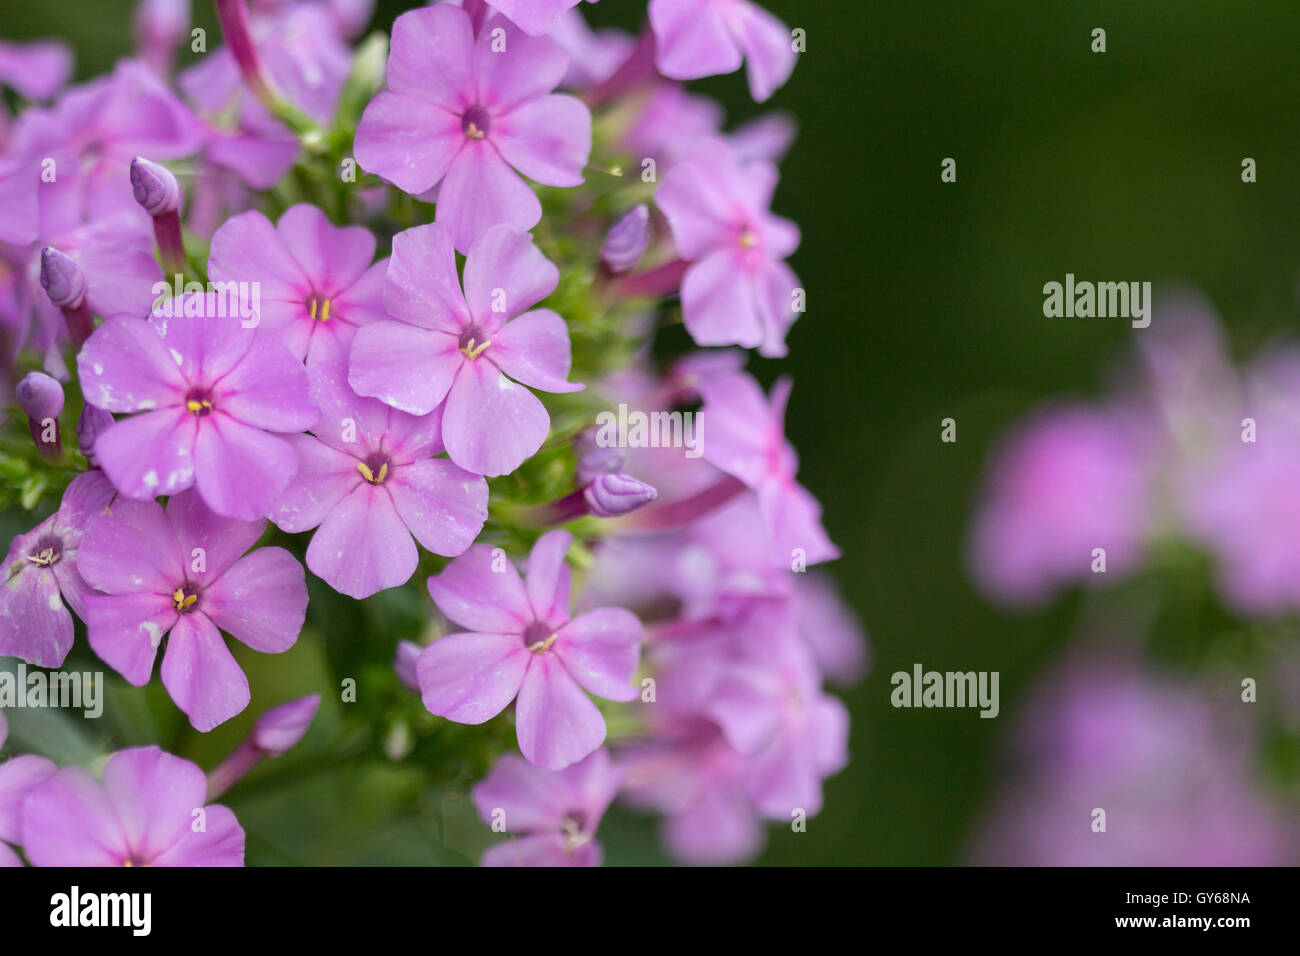 A cluster of fall phlox / summer phlox / garden phlox / perennial phlox flowers (Phlox paniculata), Indiana, United States Stock Photo